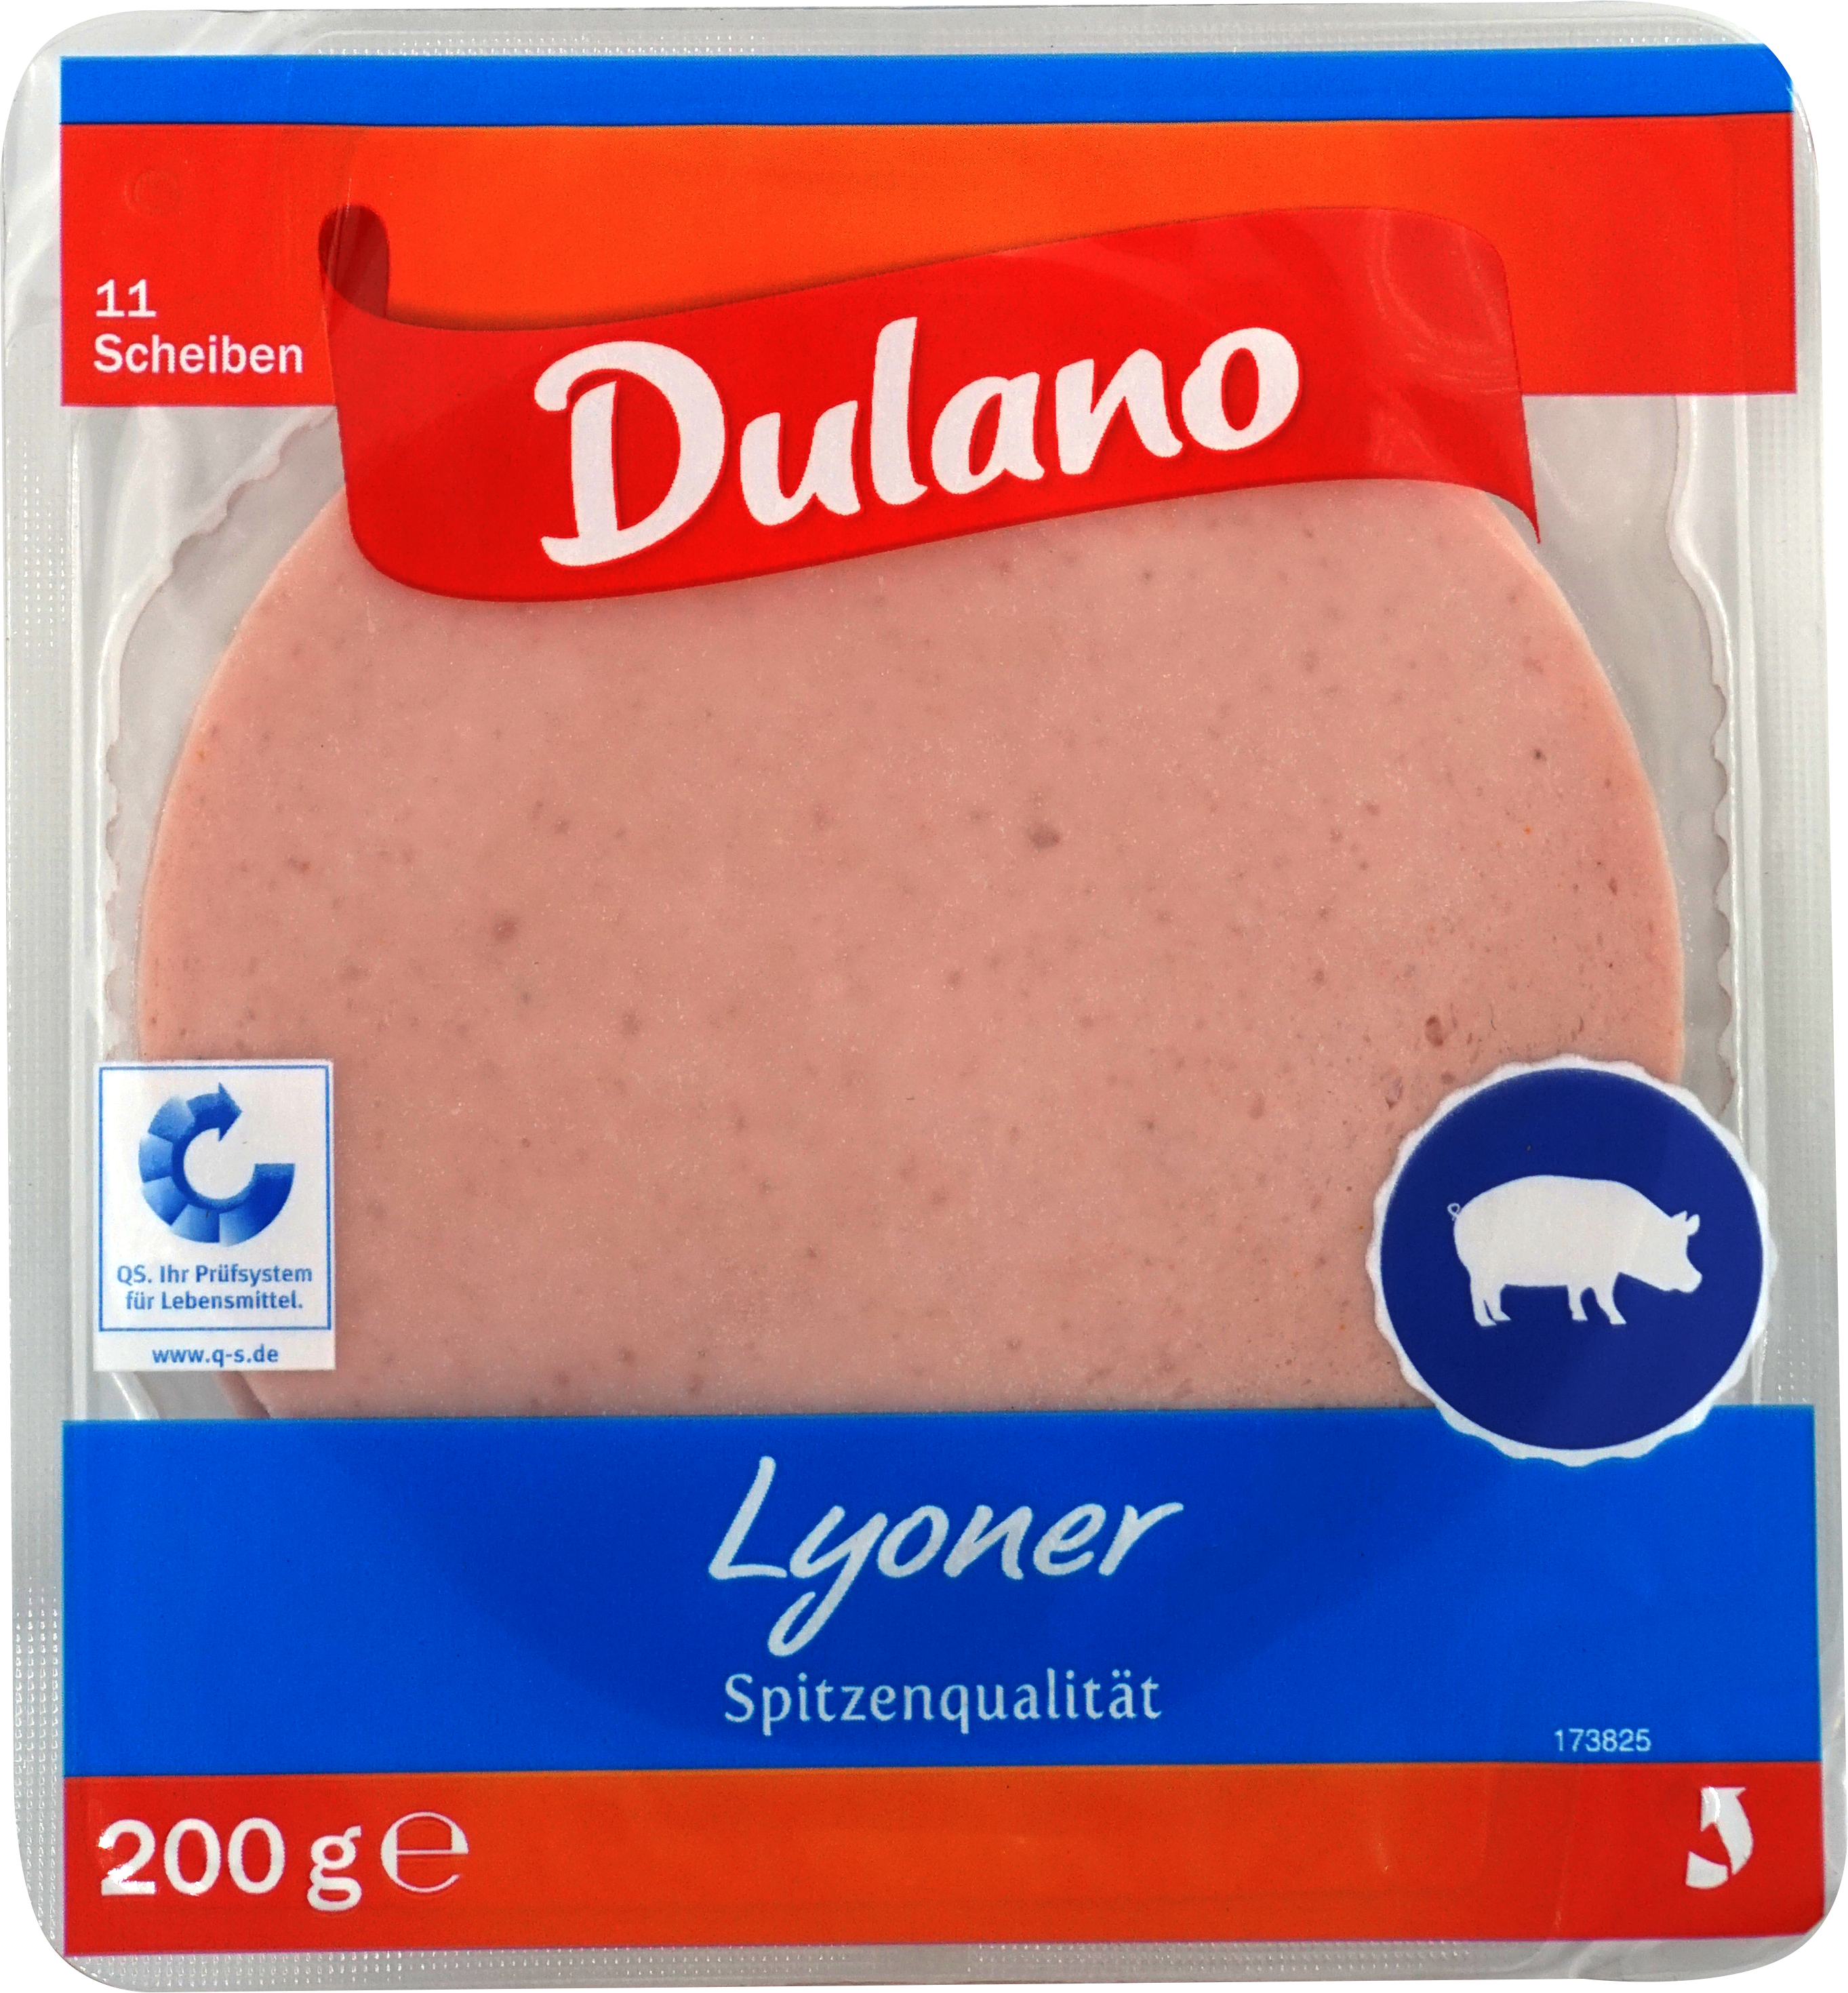 Dulano (Lidl) / · Prepared/Processed Produktionsstätten Prepared/Processed mynetfair Sausages Food Pork GmbH Family Beverage - Germany The Lyoner / Butchers Meat/Poultry/Sausages Nortrup (200 · TFB - Tobacco Sausages grams) - Meat/Poultry